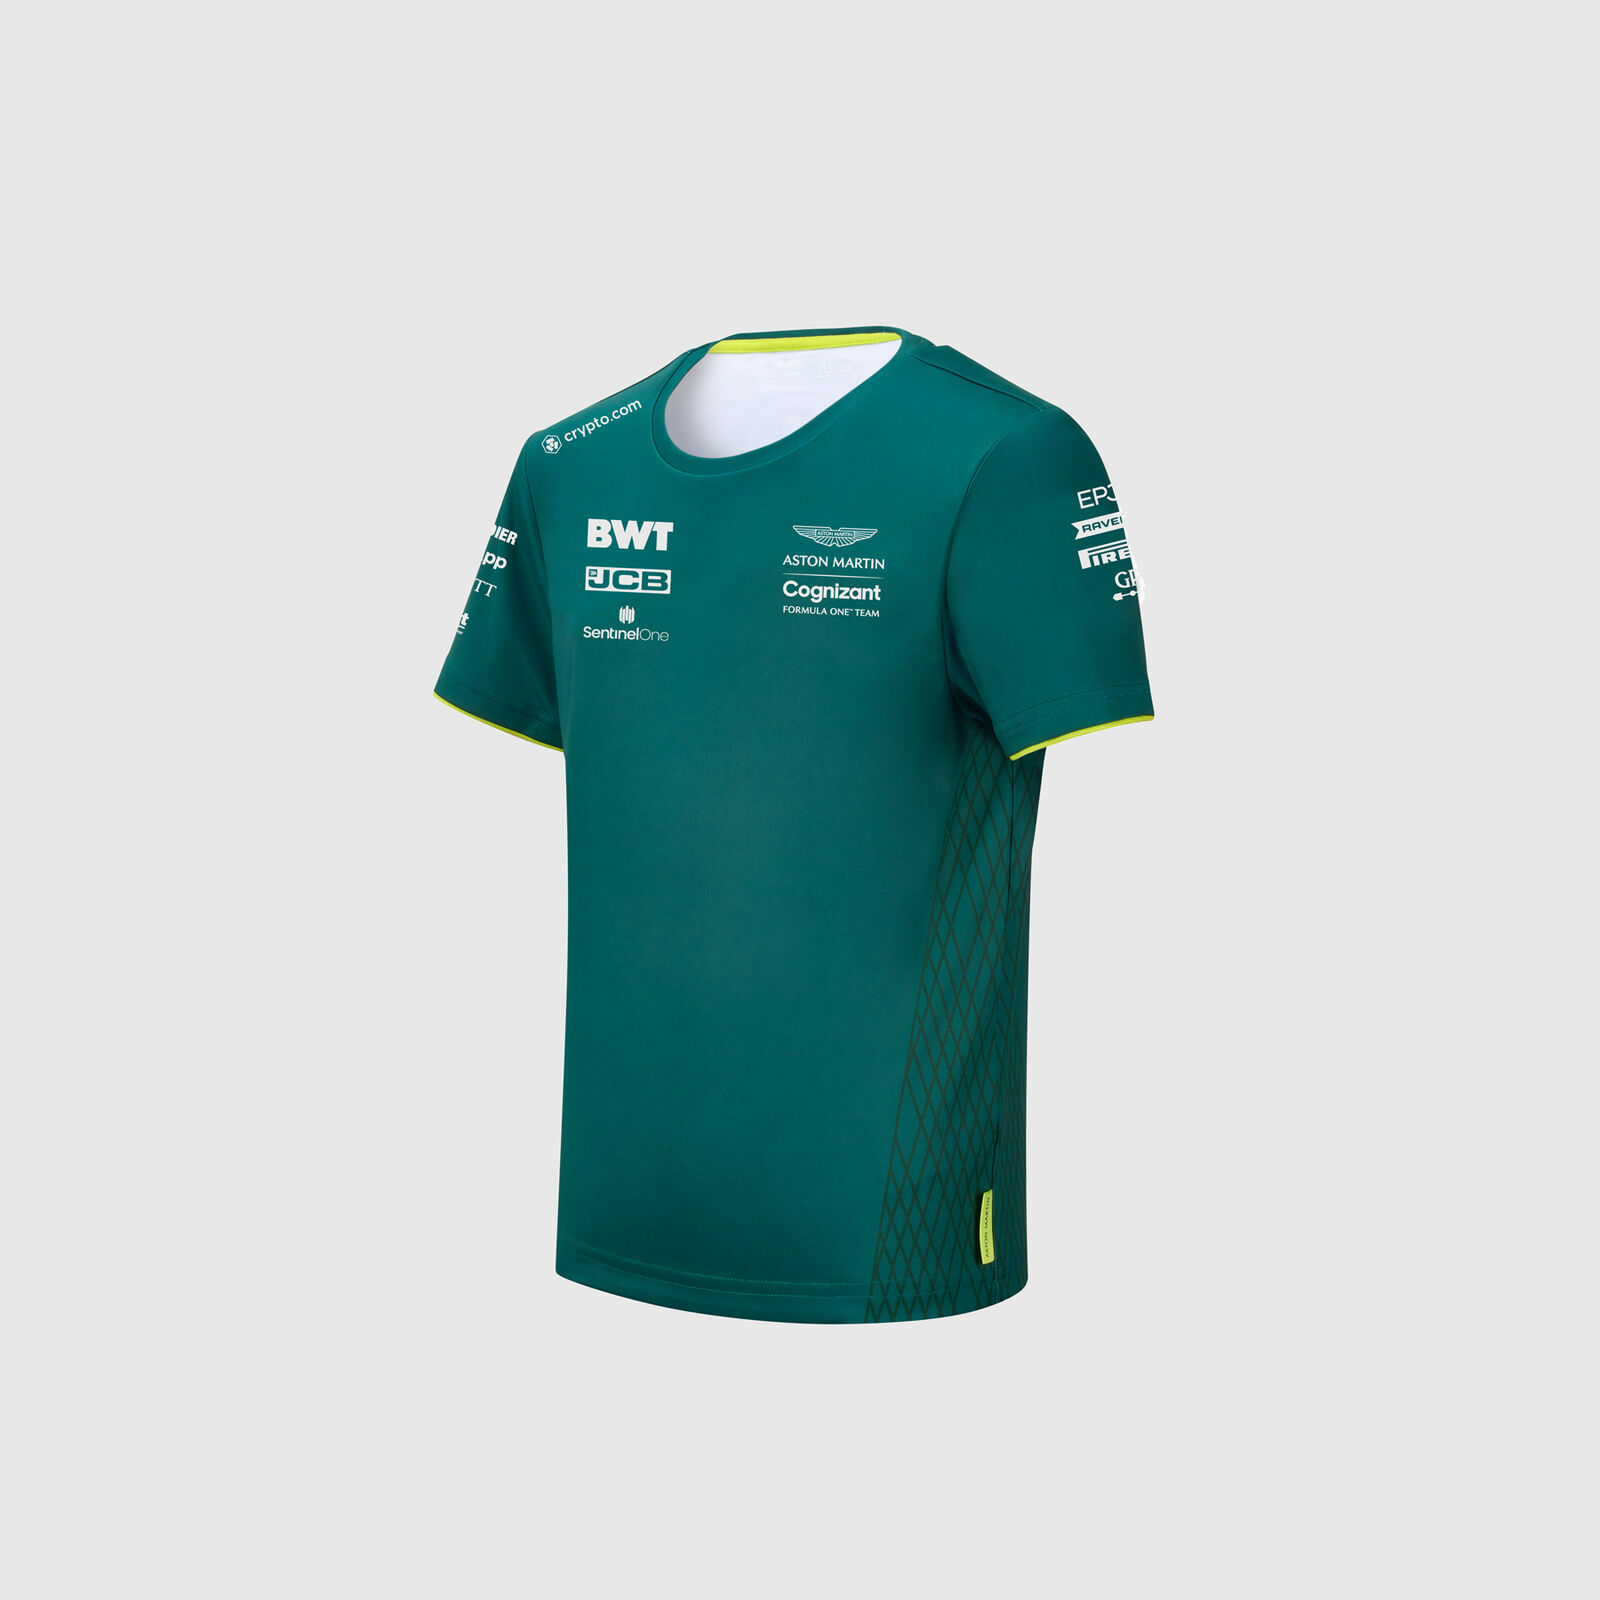 Aston Martin F1 Kids Team T-Shirt 2021 